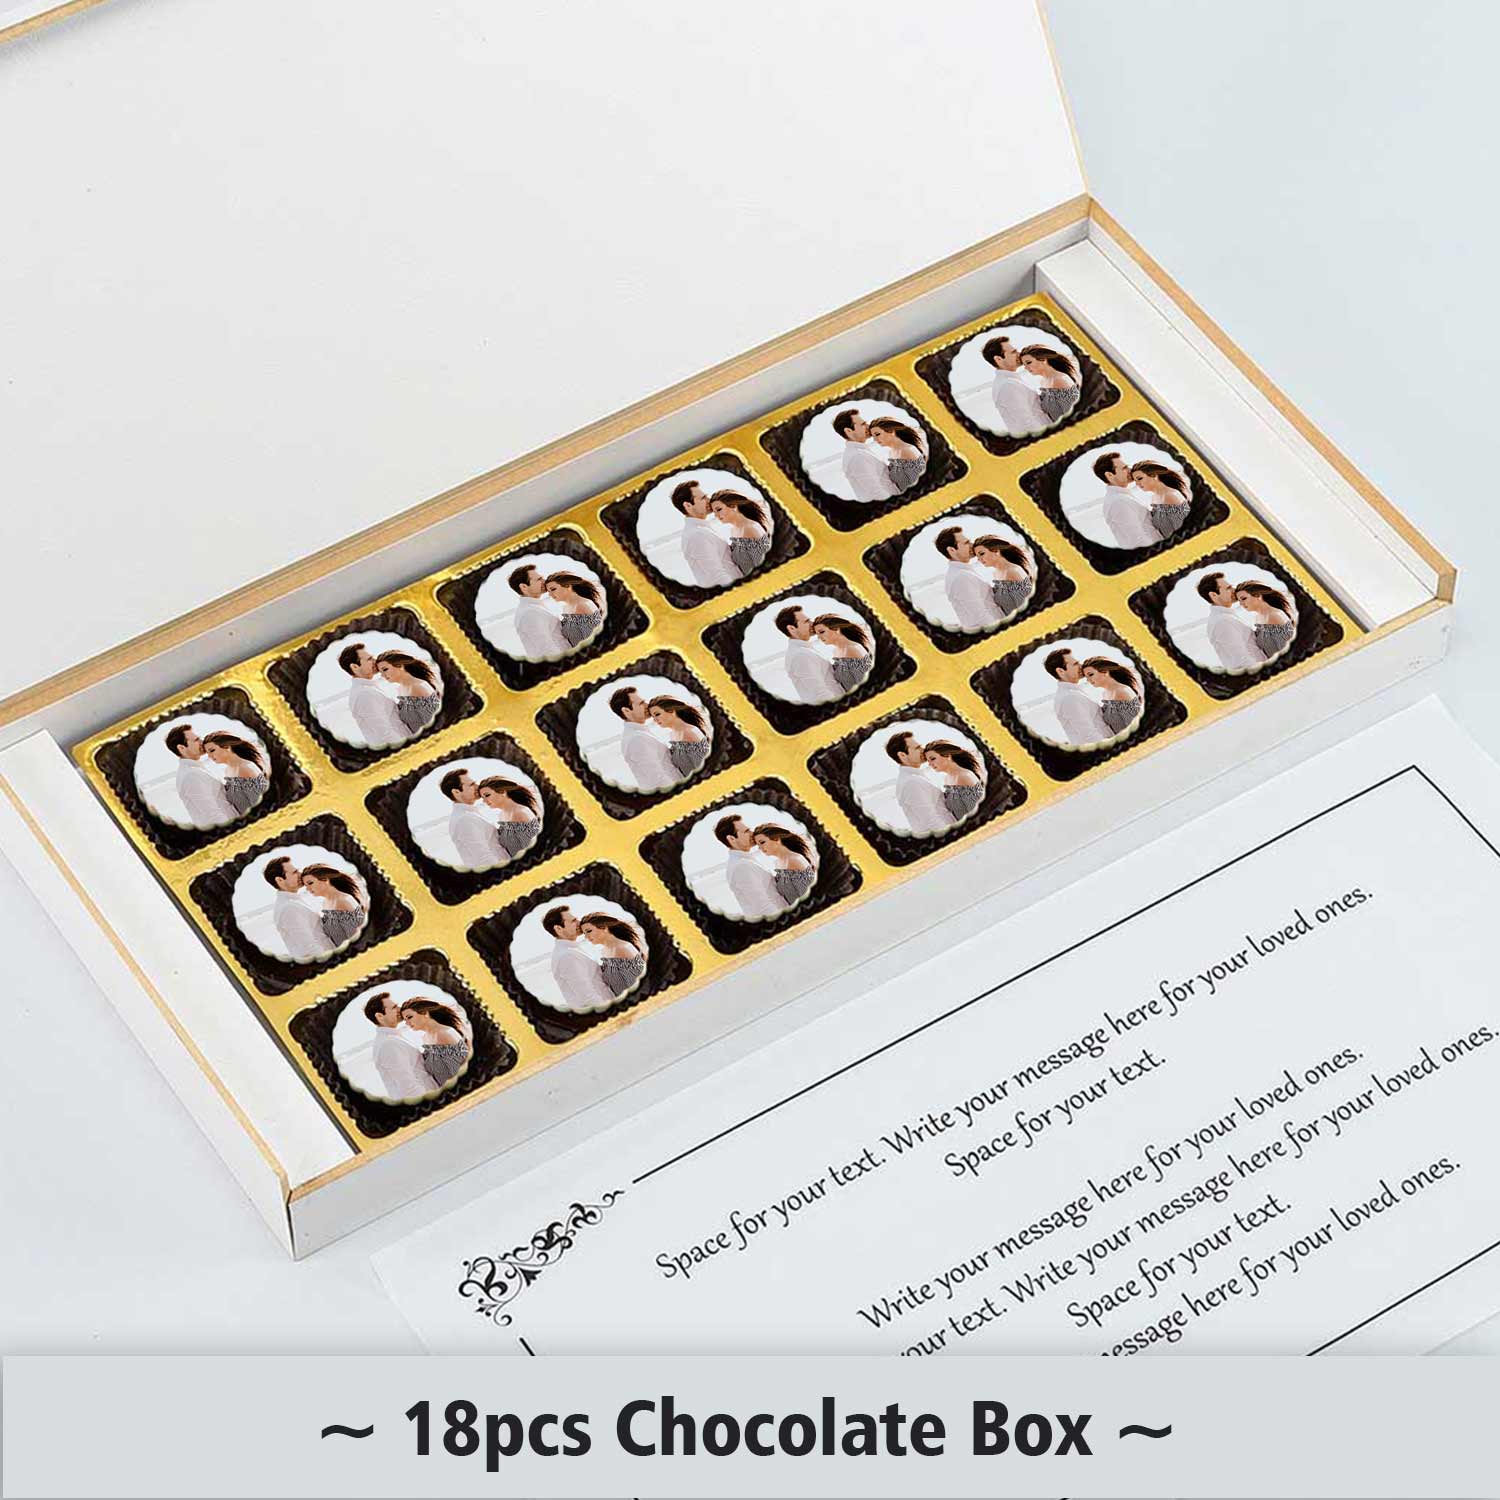 photo printed on chocolates graceful design and border